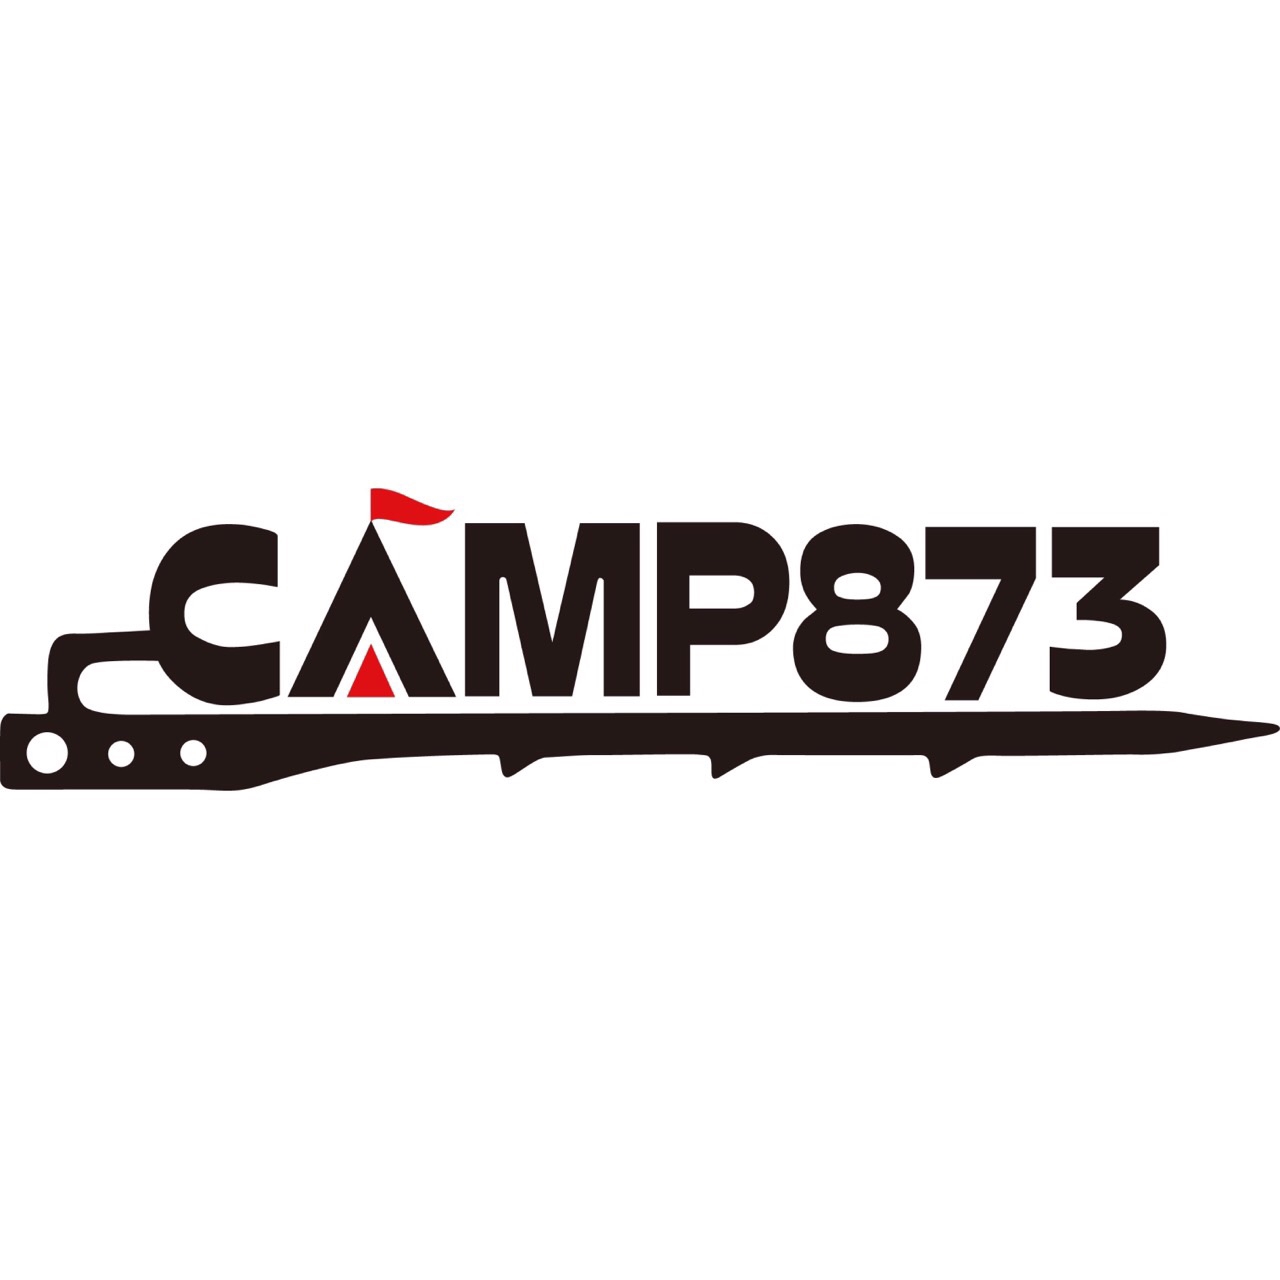 camp873 home